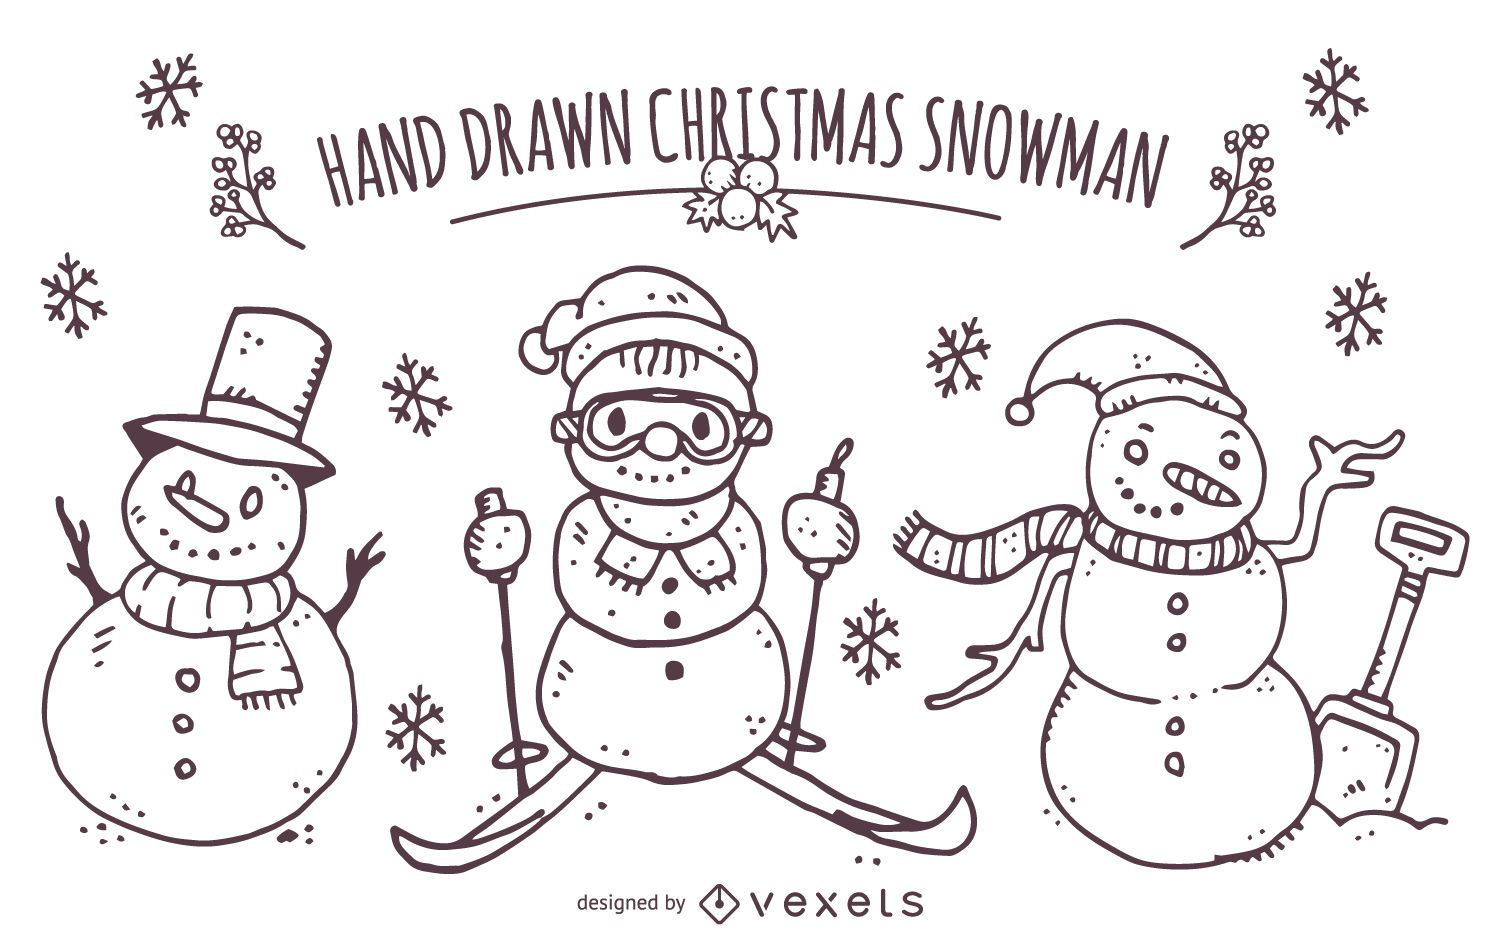 Hand drawn Christmas snowman set